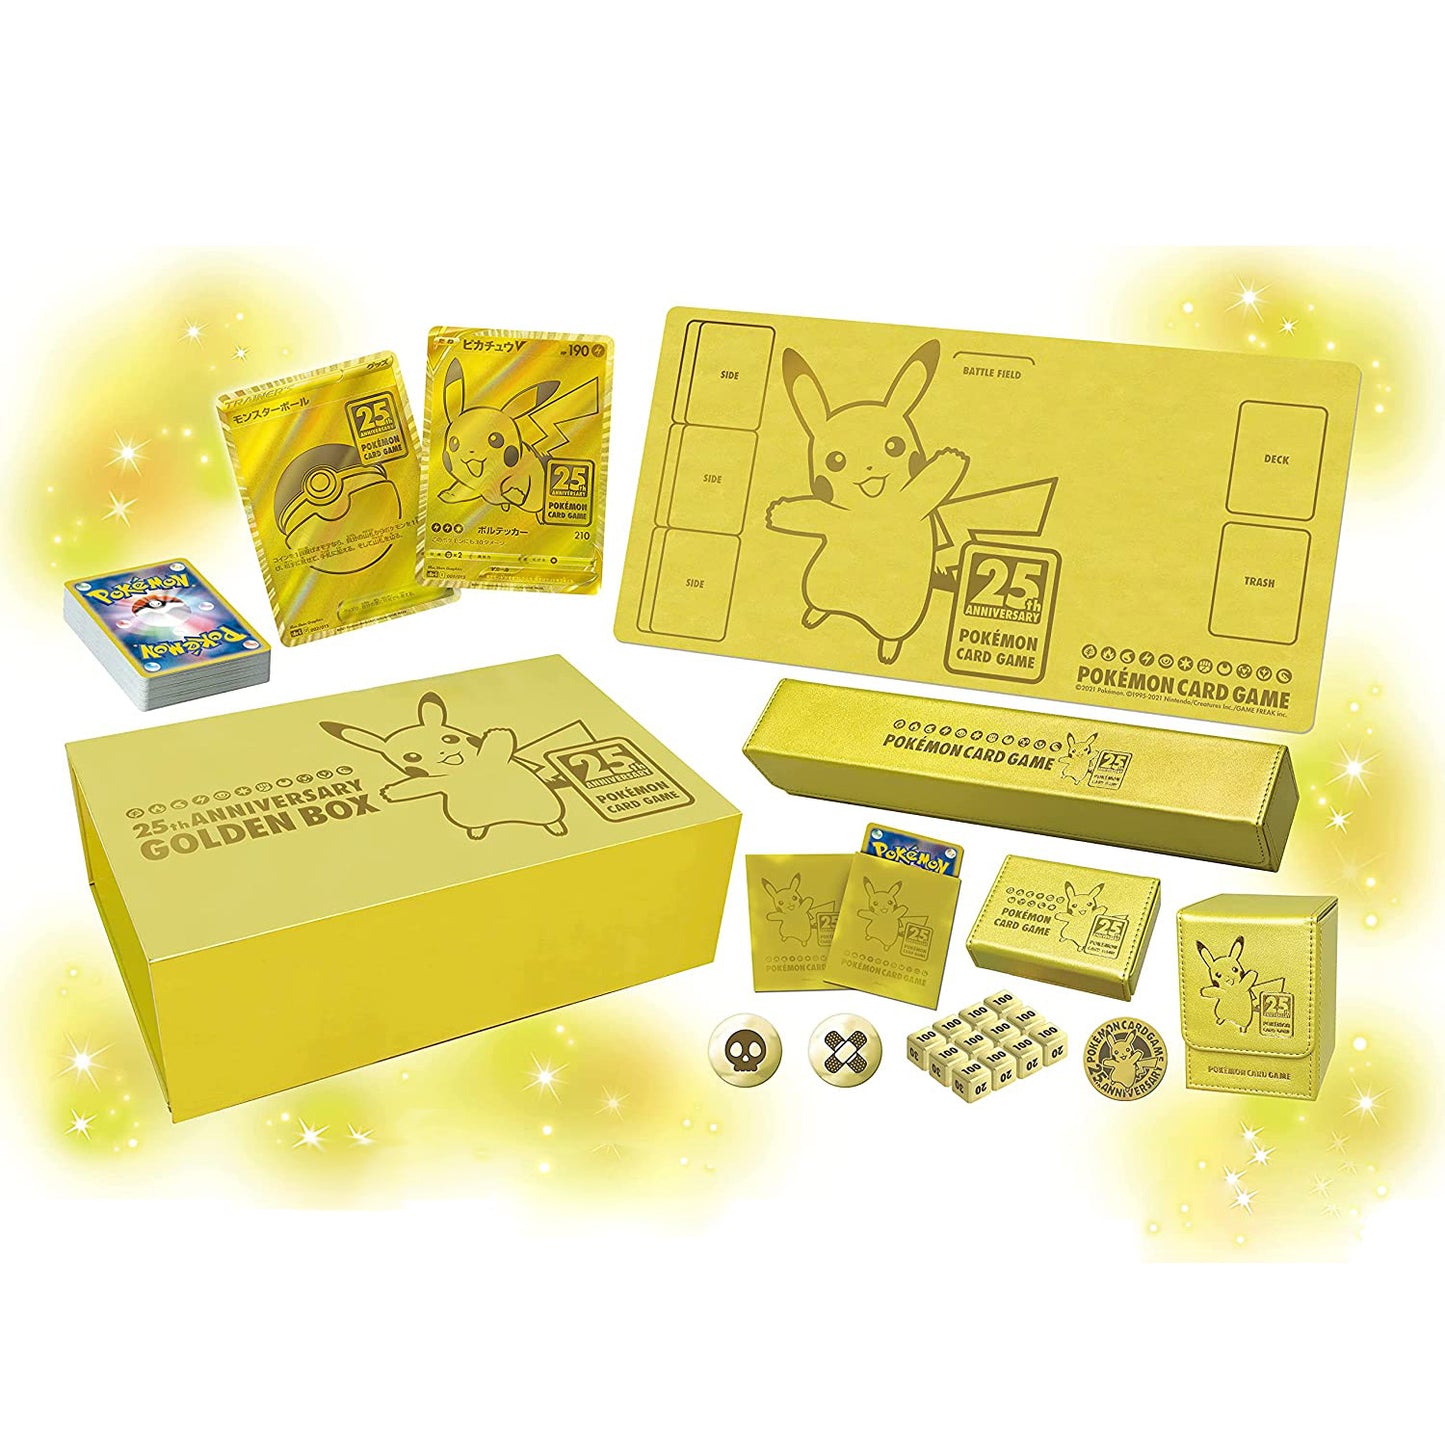 CAJA POKEMON GOLDEN BOX 25TH ANNIVERSARY JAPONÉS